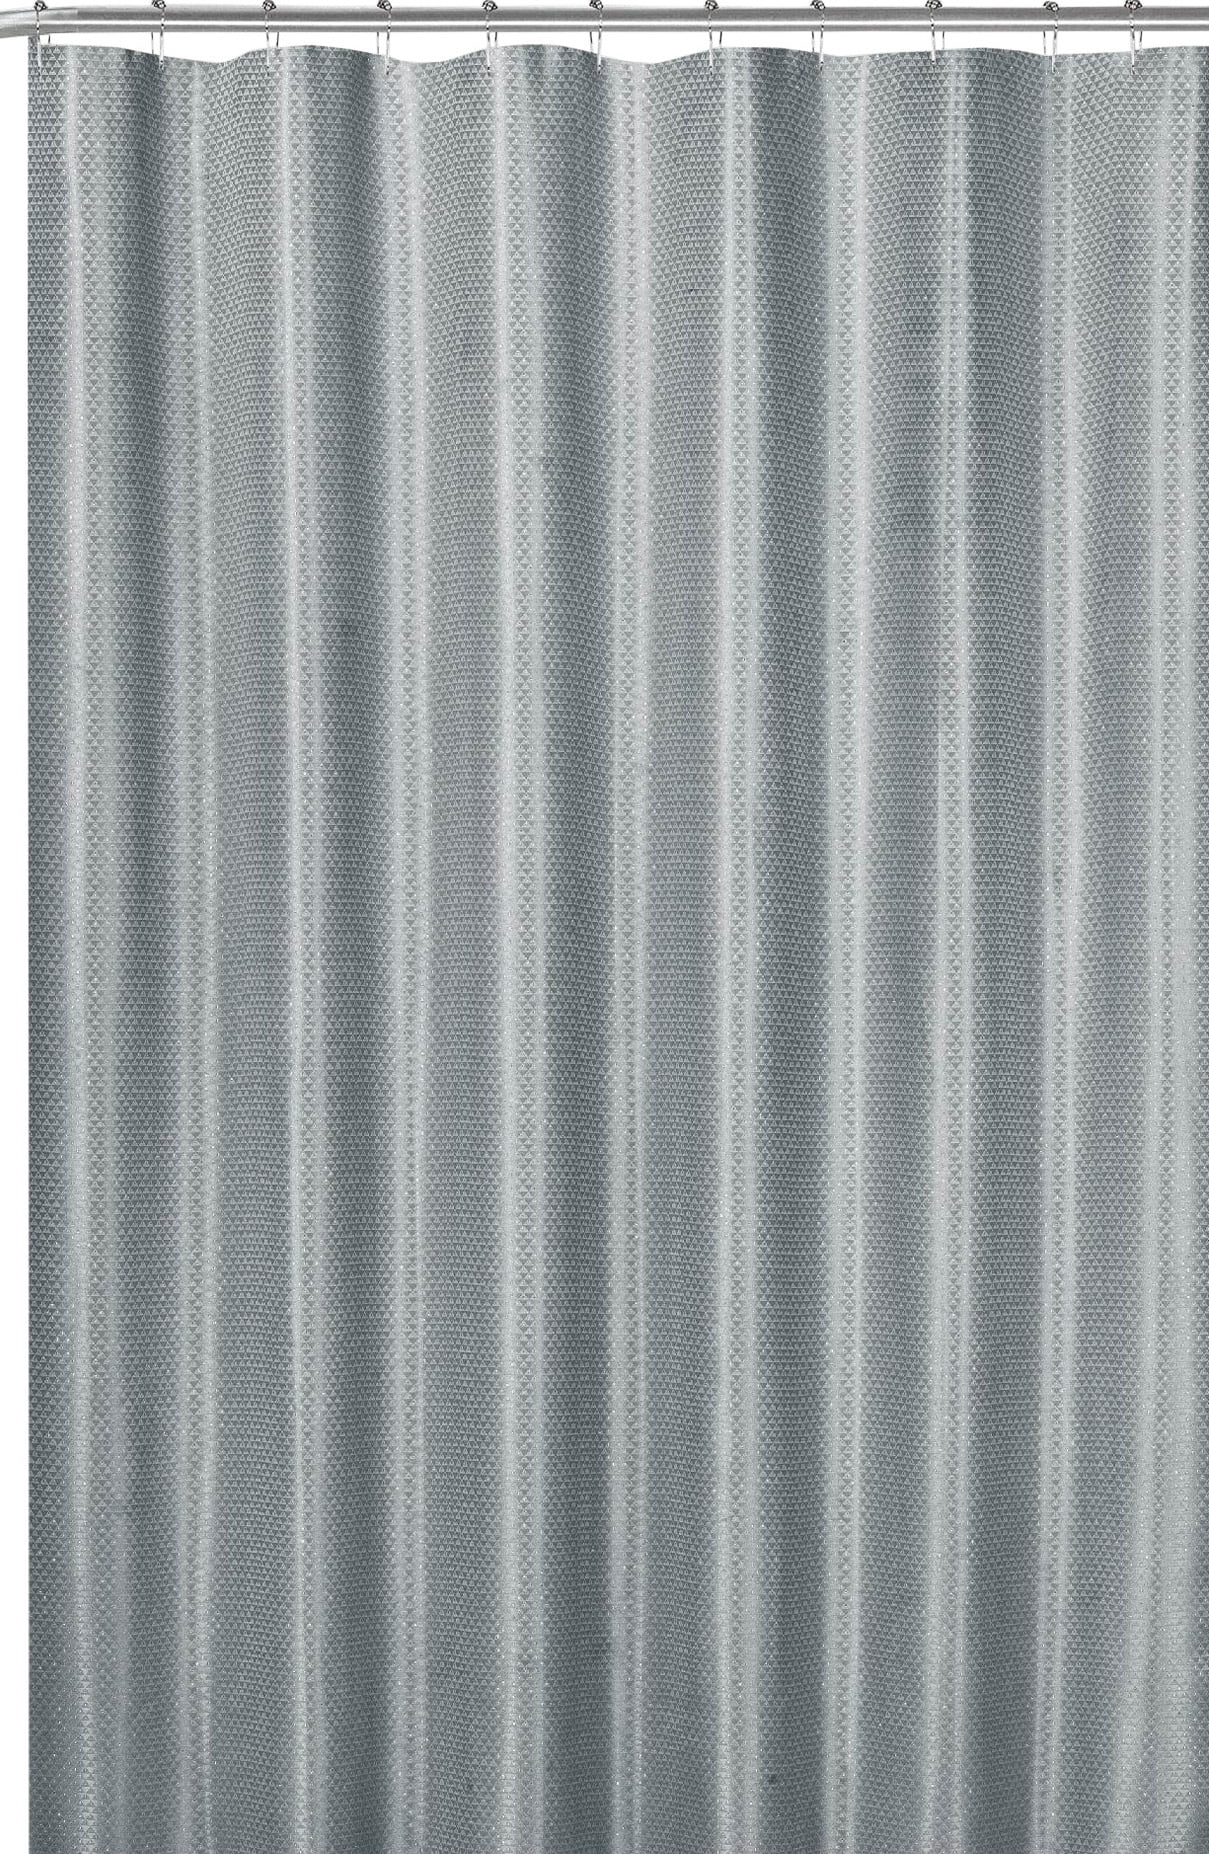 Gray Fabric Shower Curtain Modern, Silver Gray Shower Curtain